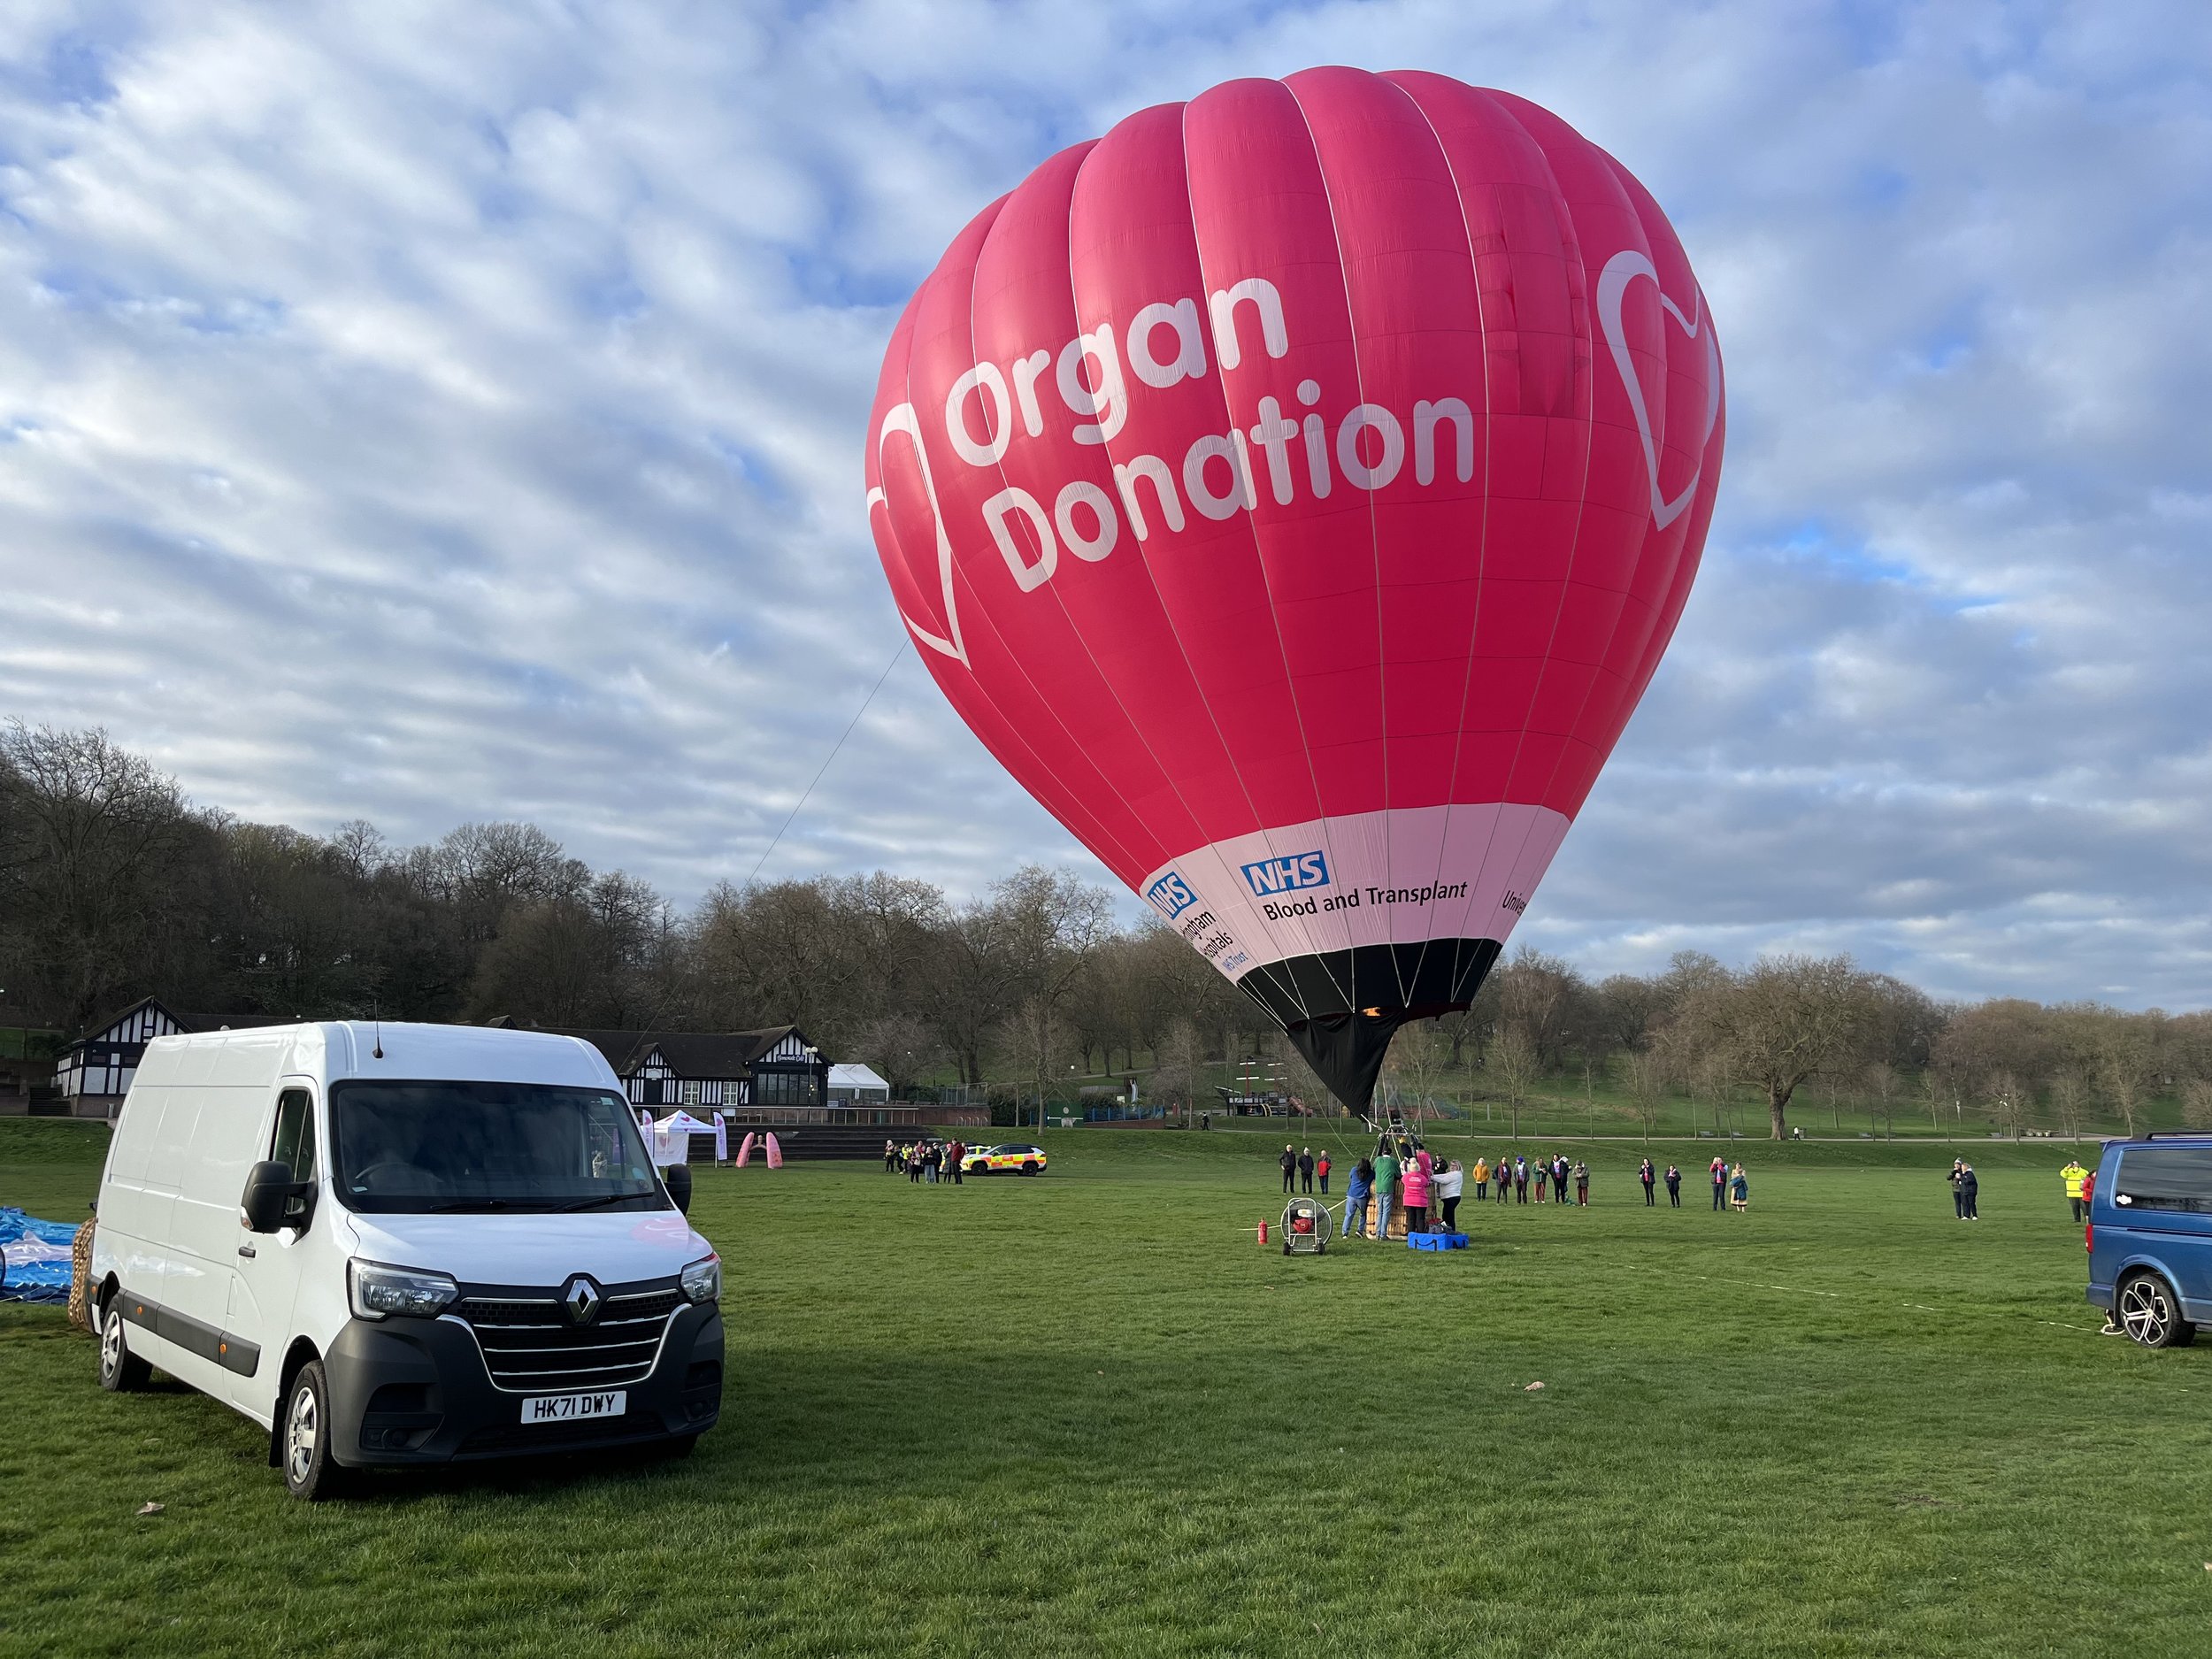 Hot air Balloon advertising with Organ Donation